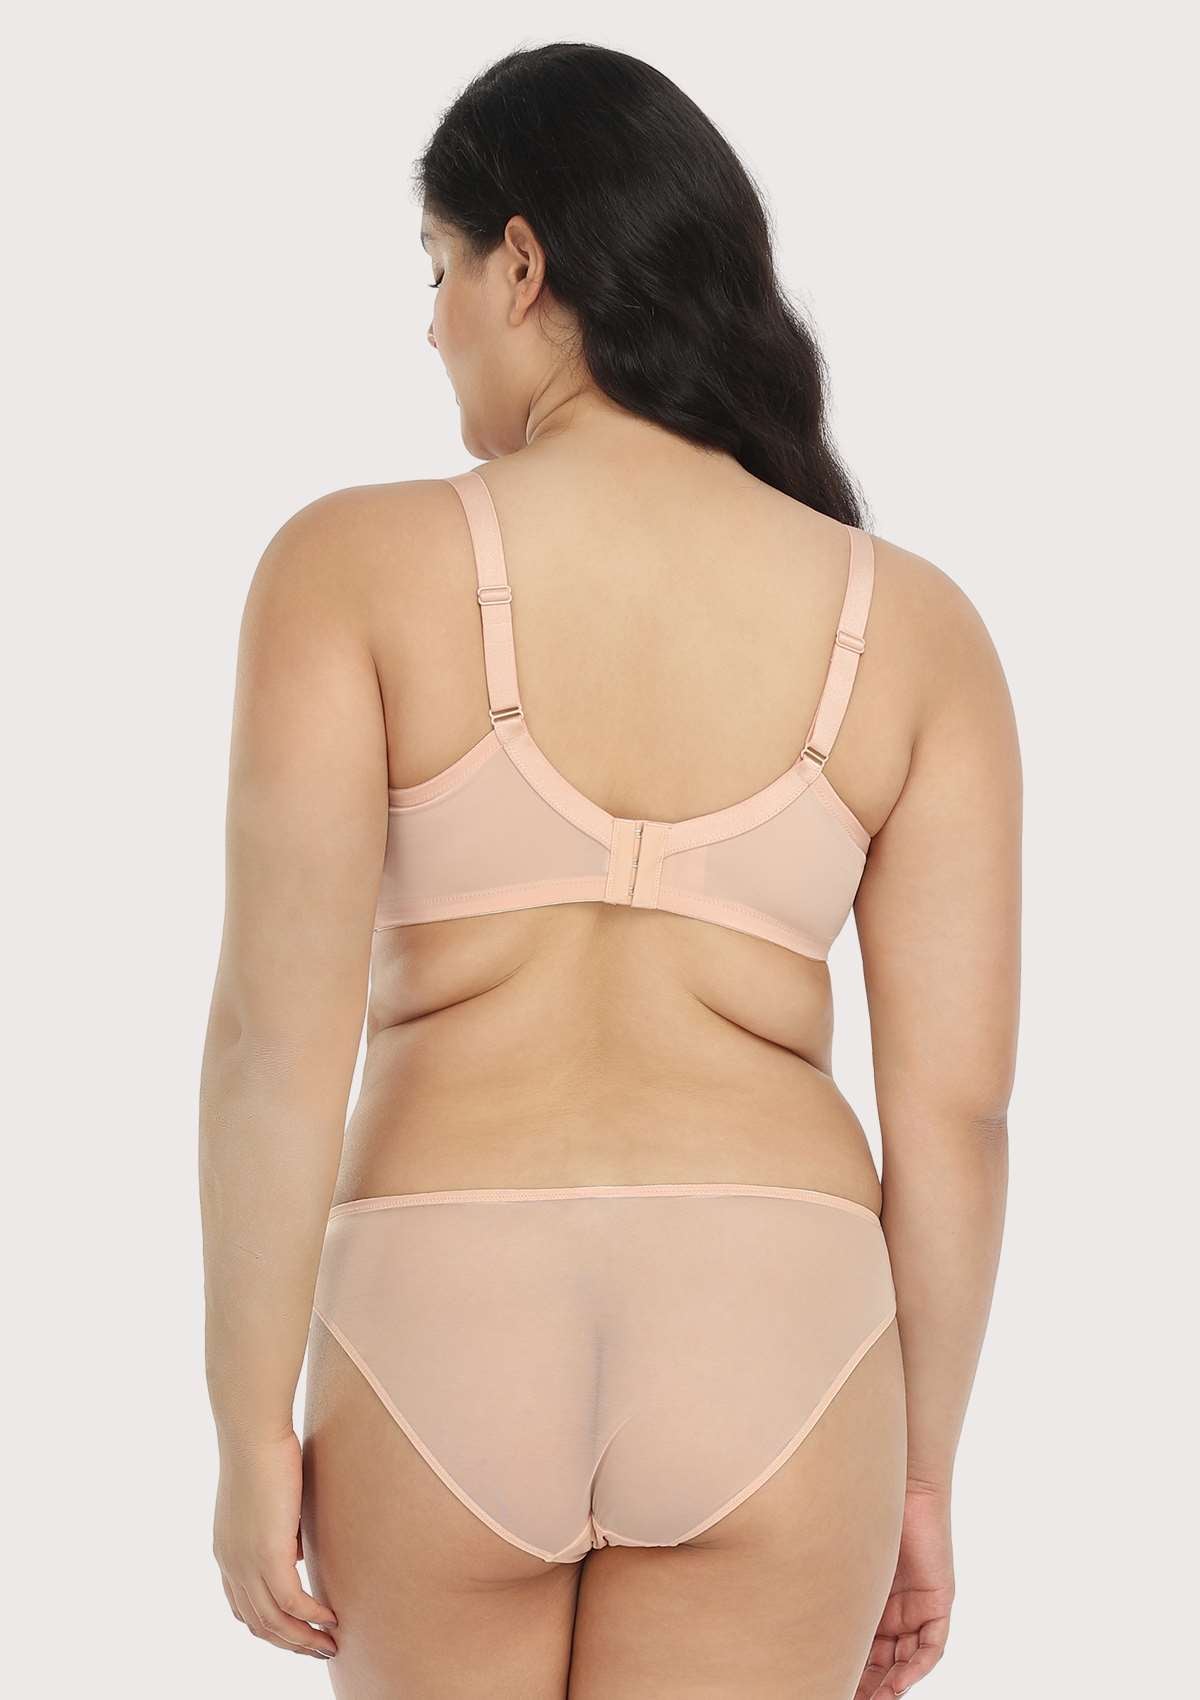 HSIA Sunflower Matching Bra And Panties Set: Comfortable Plus Size Bra - Pink / 34 / DD/E